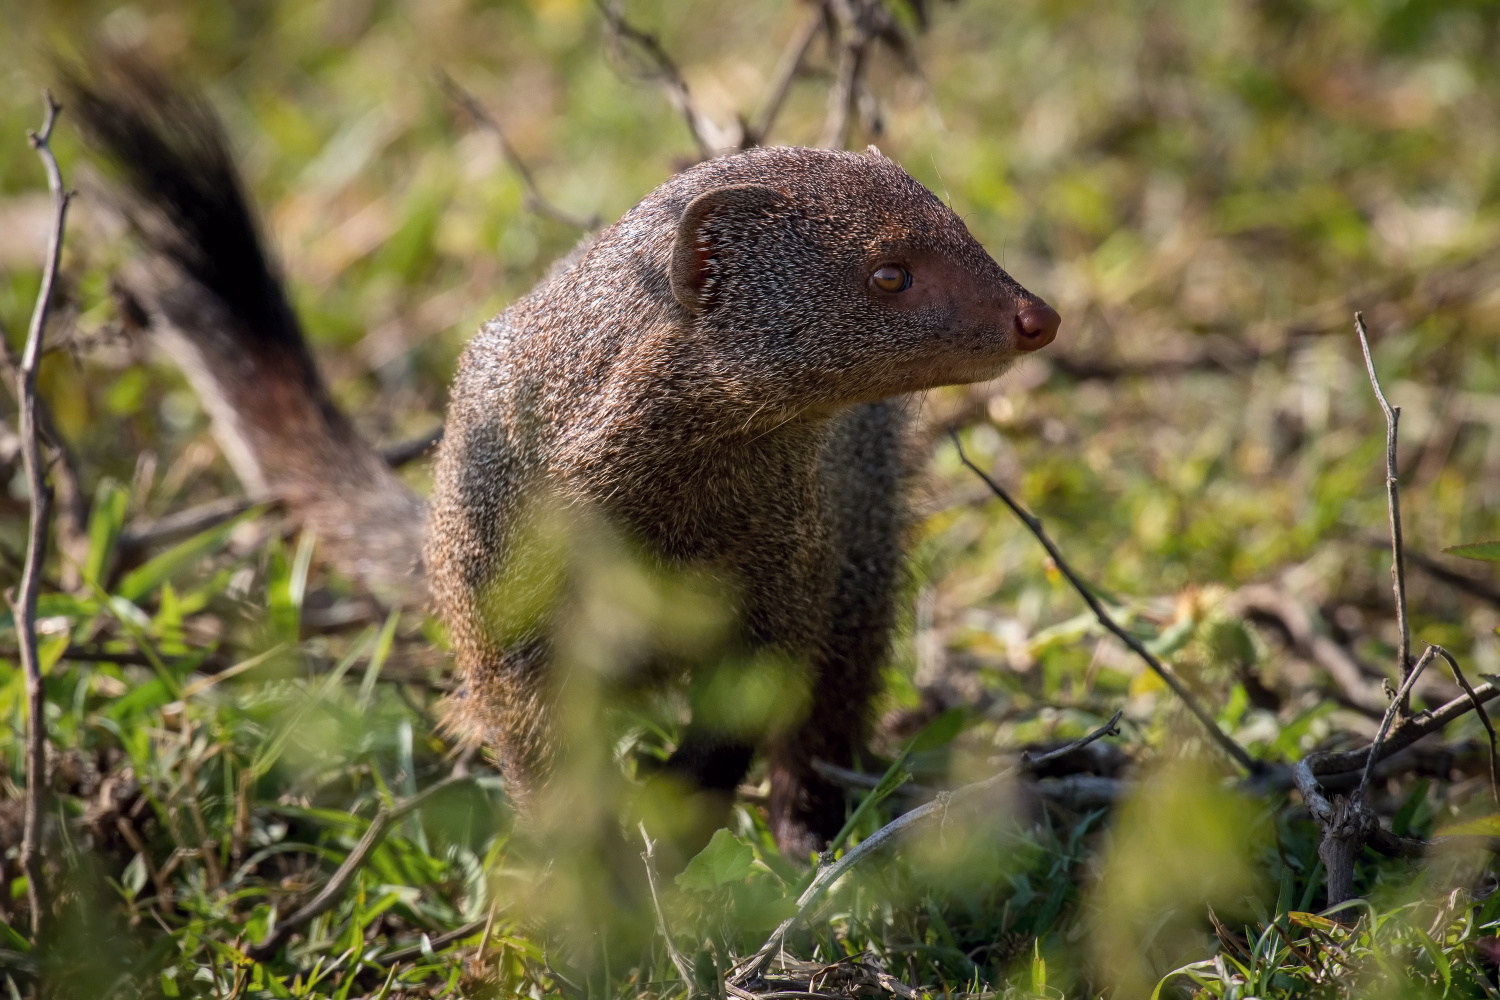 promyka rudá (Herpestes smithii) Ruddy mongoose